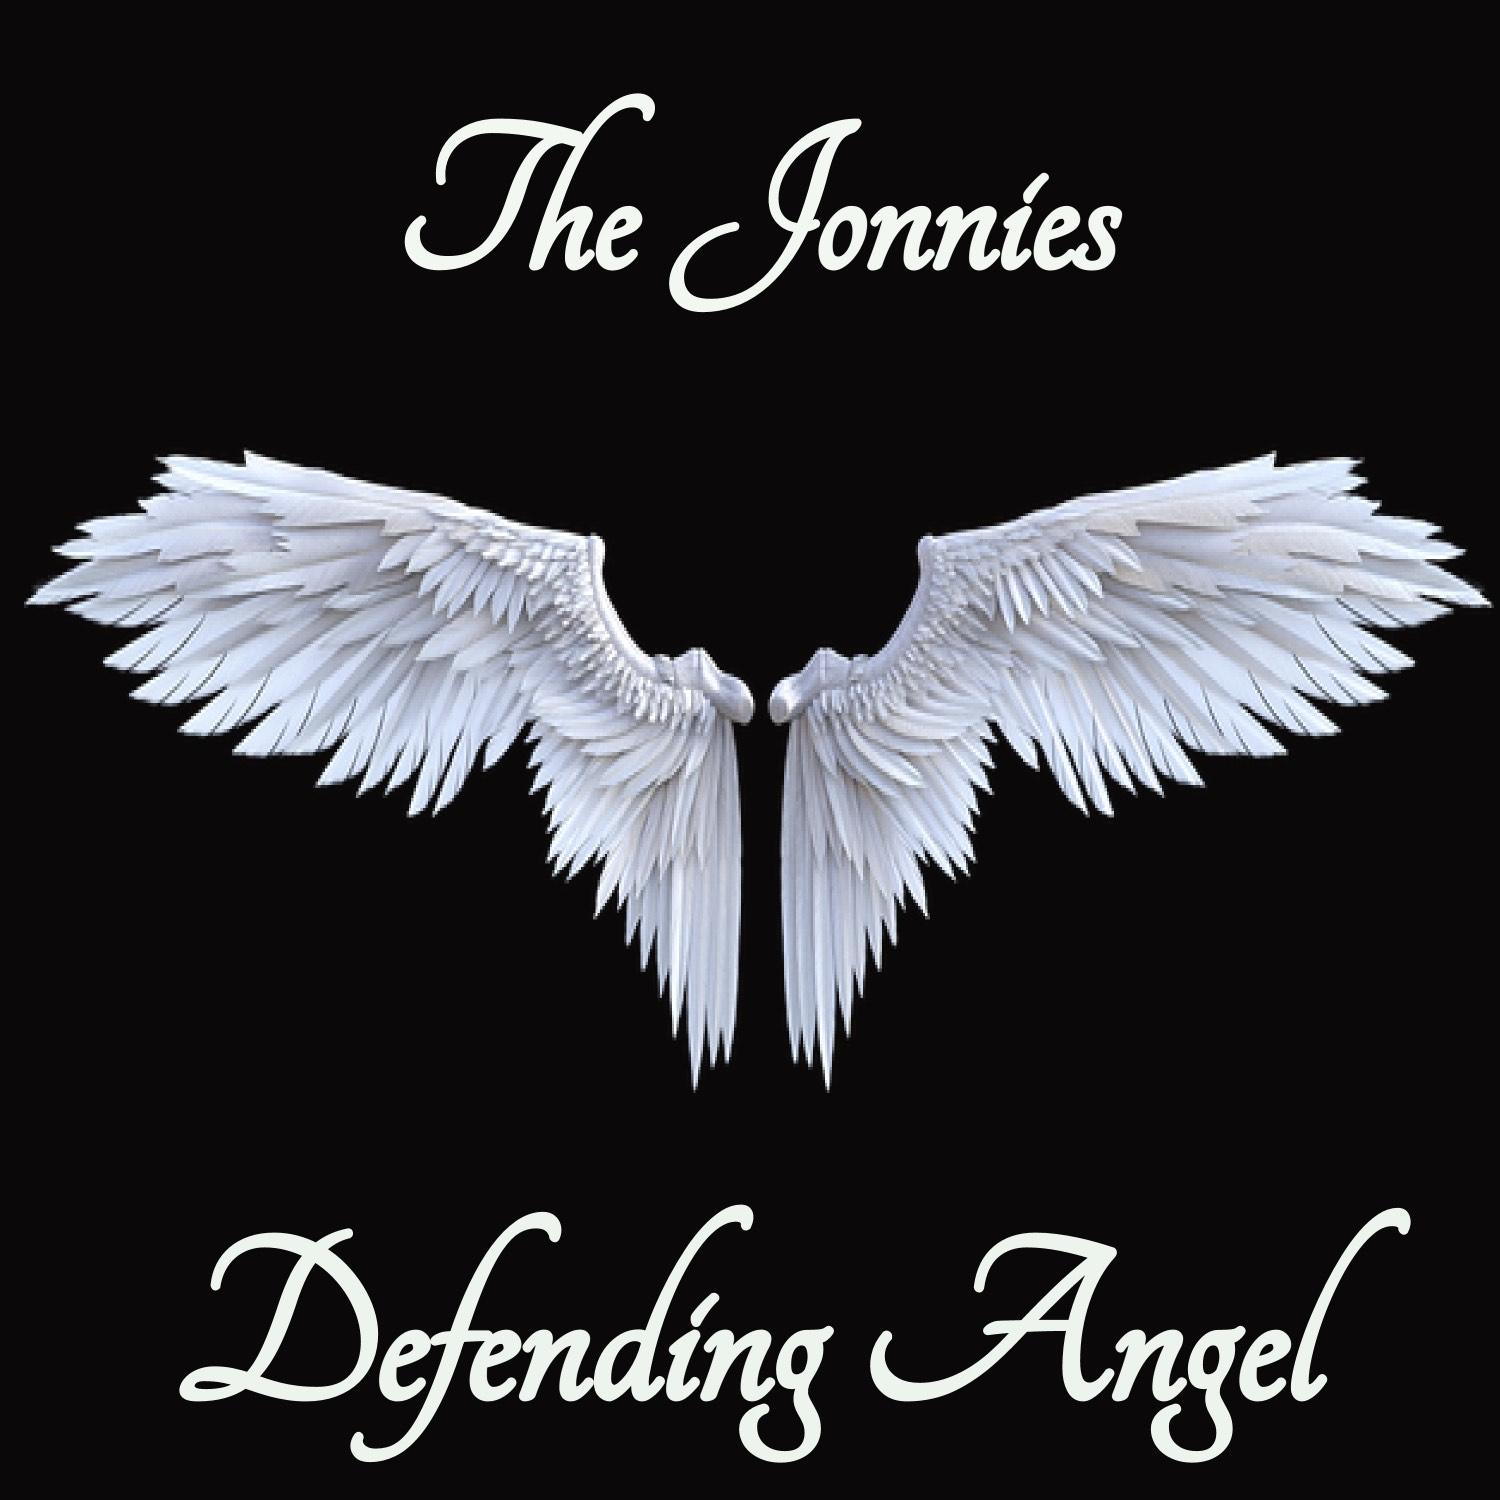 Defending Angel - All providers